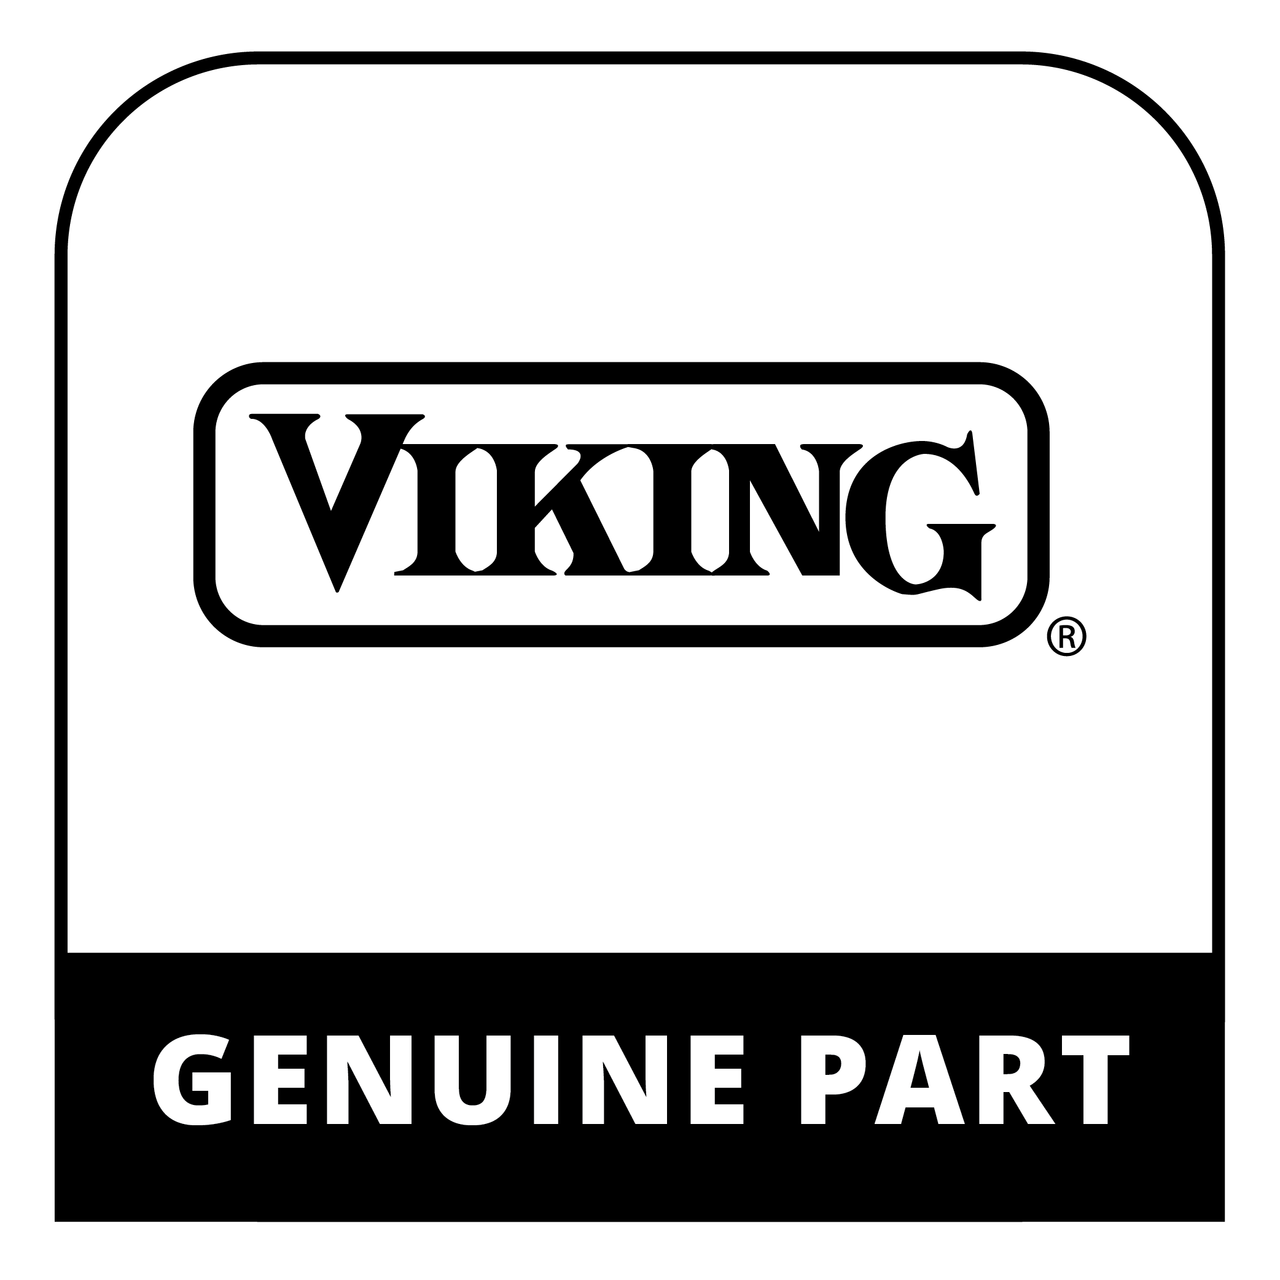 Viking 060366-000 - BRKT, HSG, TOP UI, COLUMN 24" 7 SERIES - Genuine Viking Part